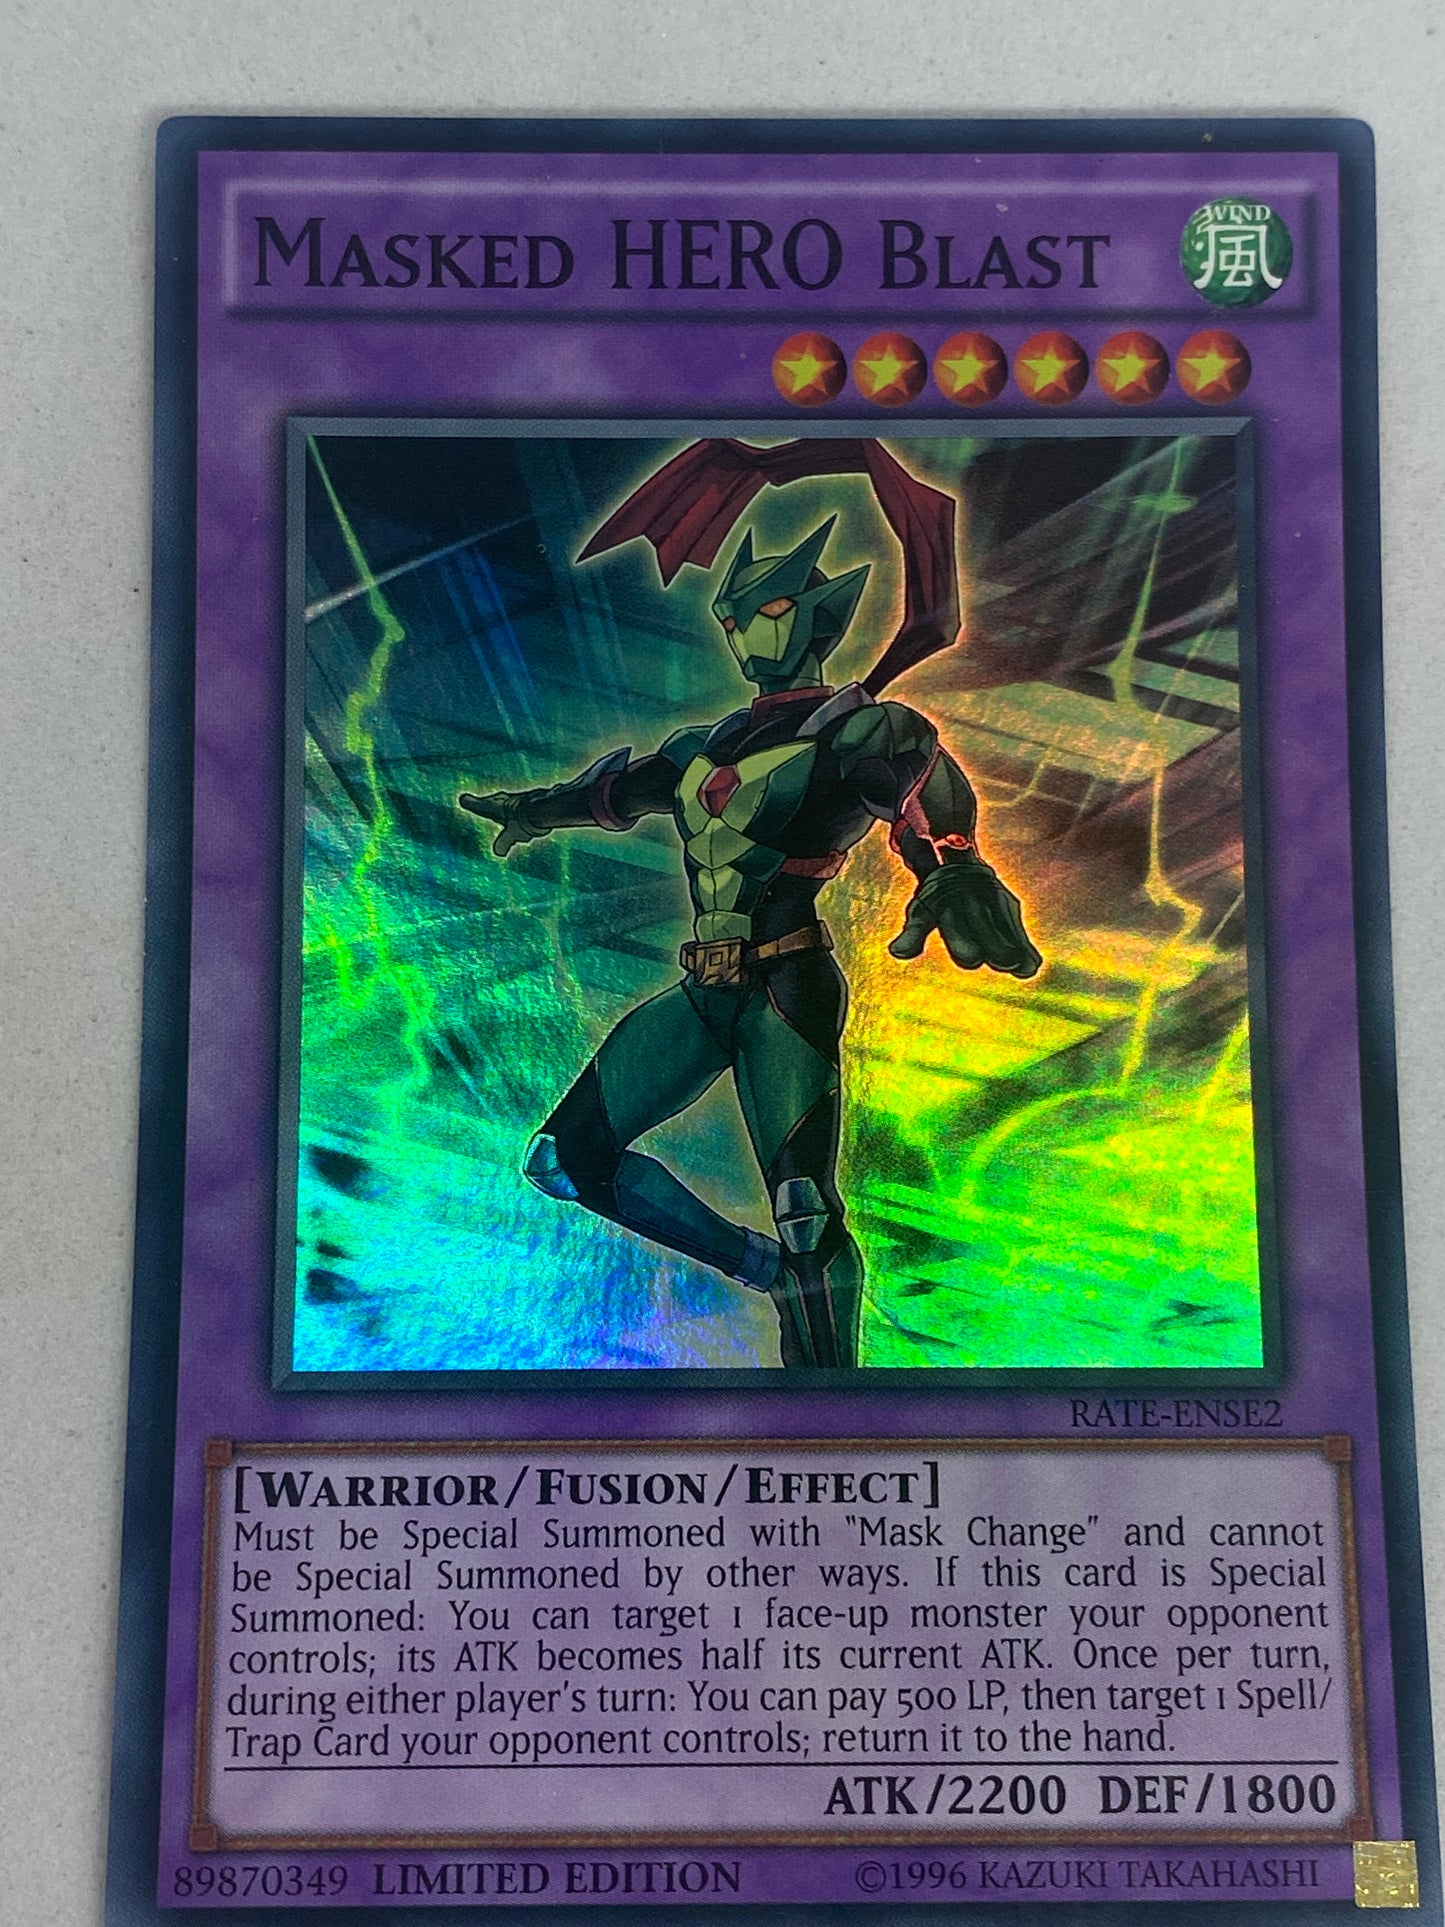 Masked HERO Blast RATE-ENSE2